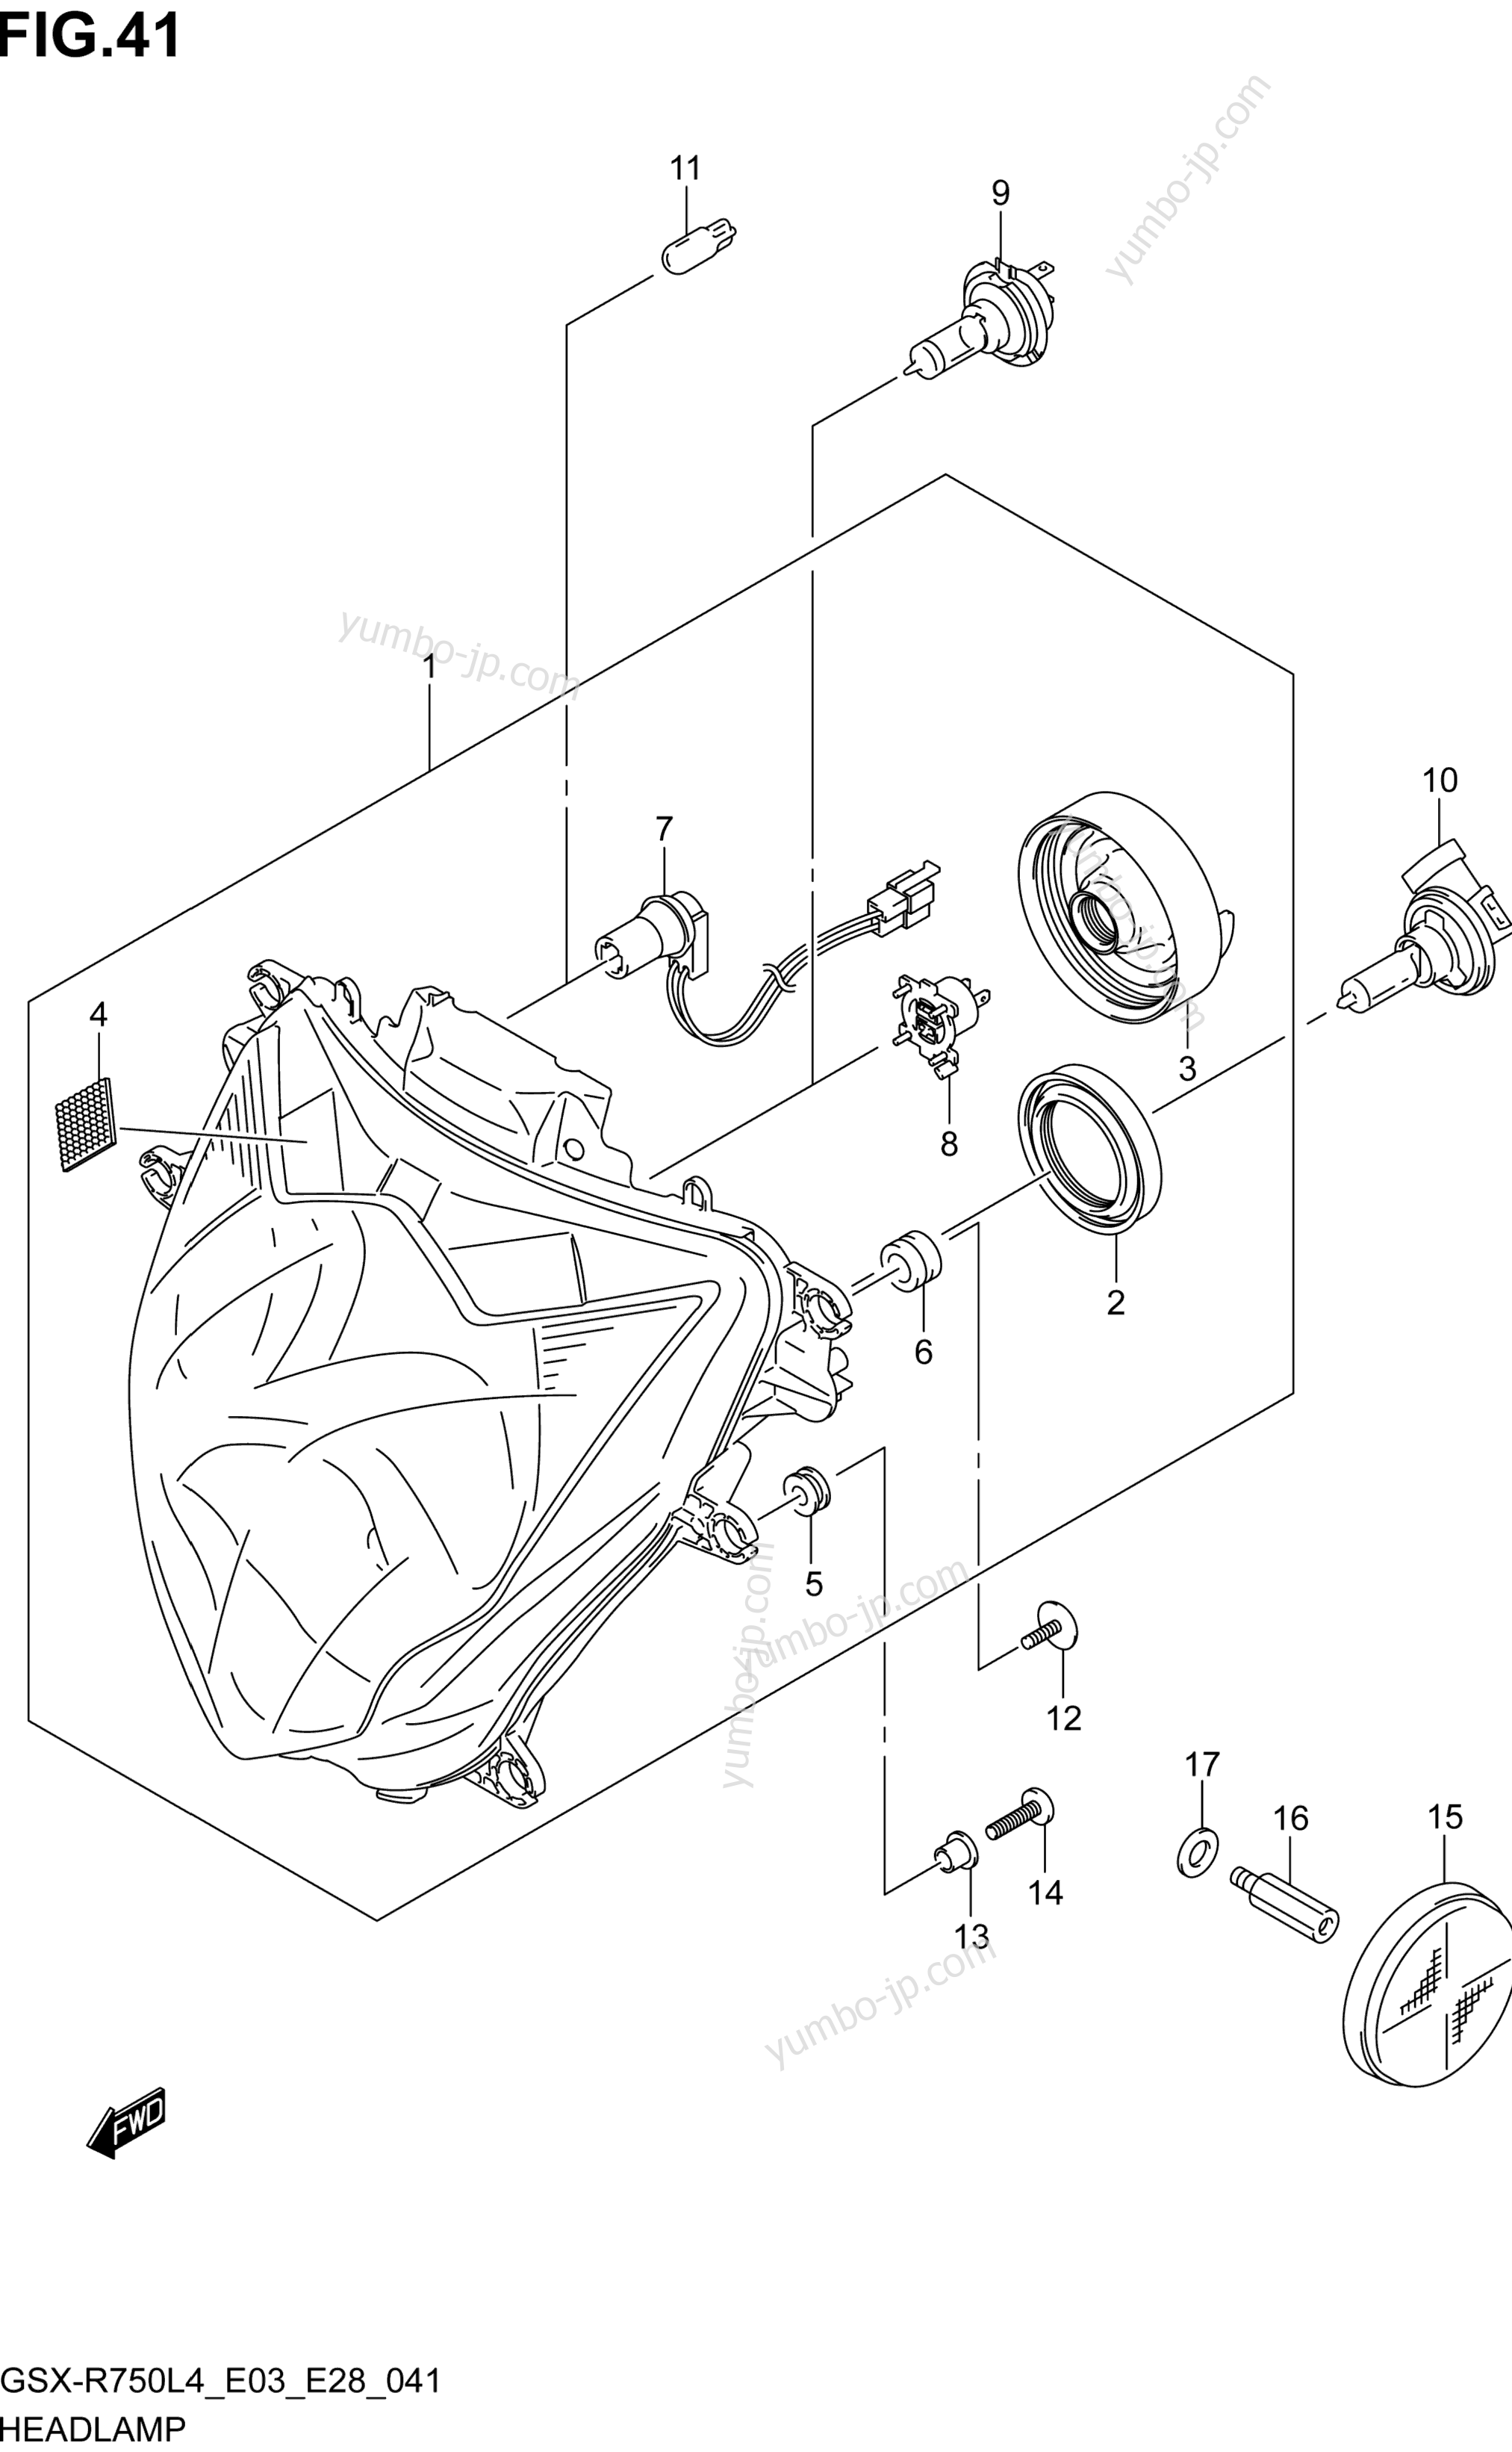 HEADLAMP (GSX-R750L4 E03) for motorcycles SUZUKI GSX-R750 2014 year